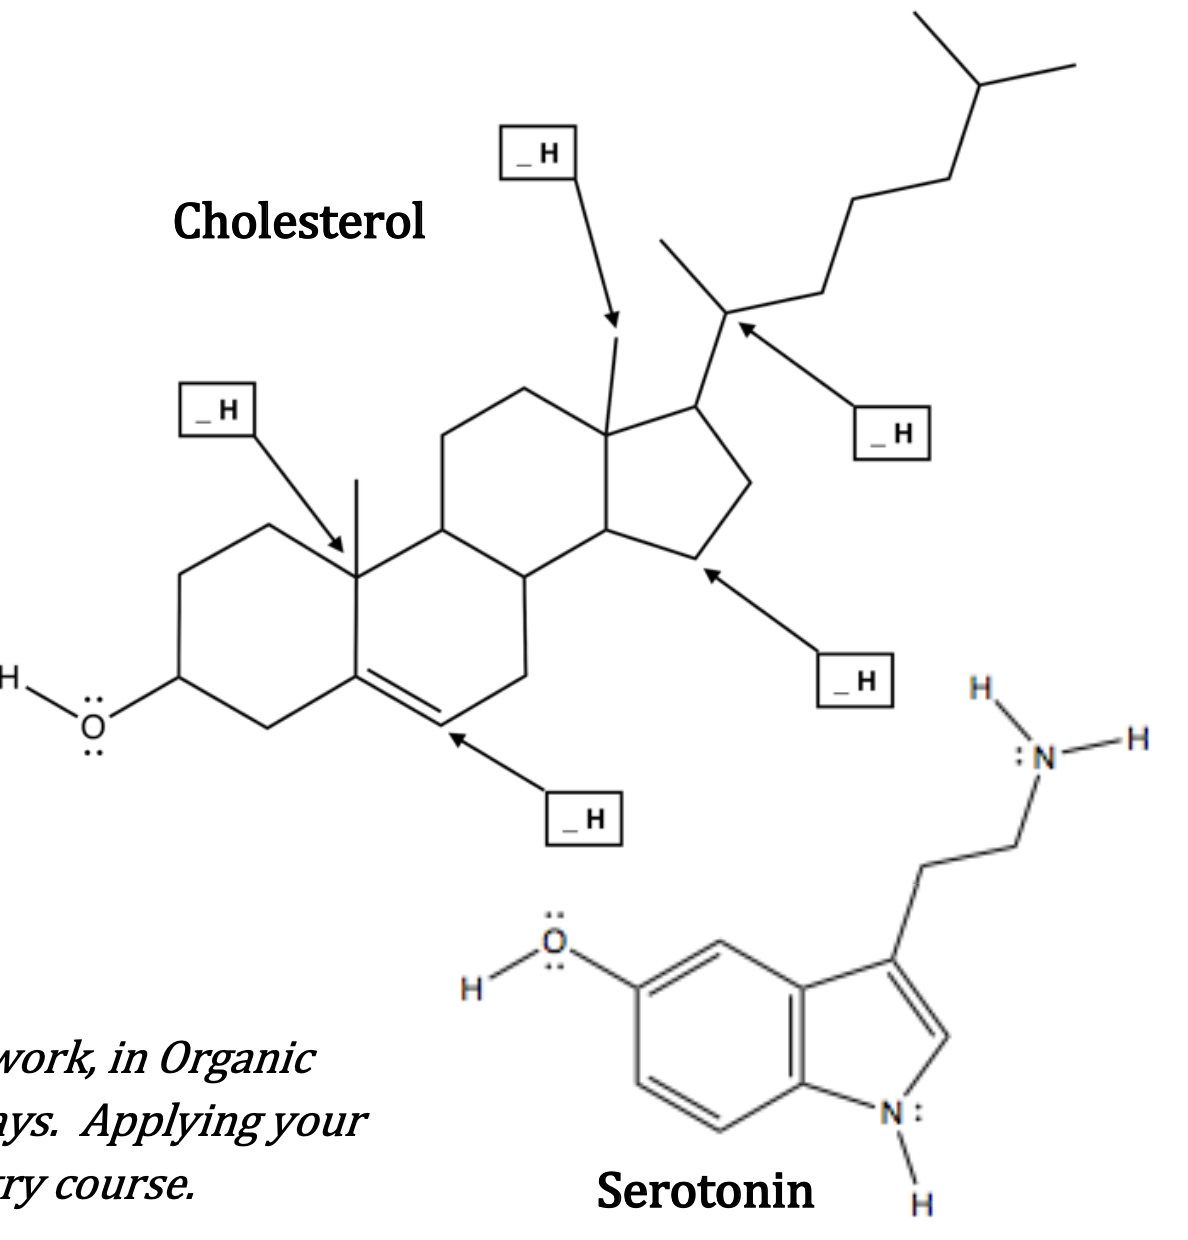 H
:O:
Cholesterol
H
work, in Organic
ays. Applying your
ry course.
H
H
Serotonin
H
H
Н.
:N-H